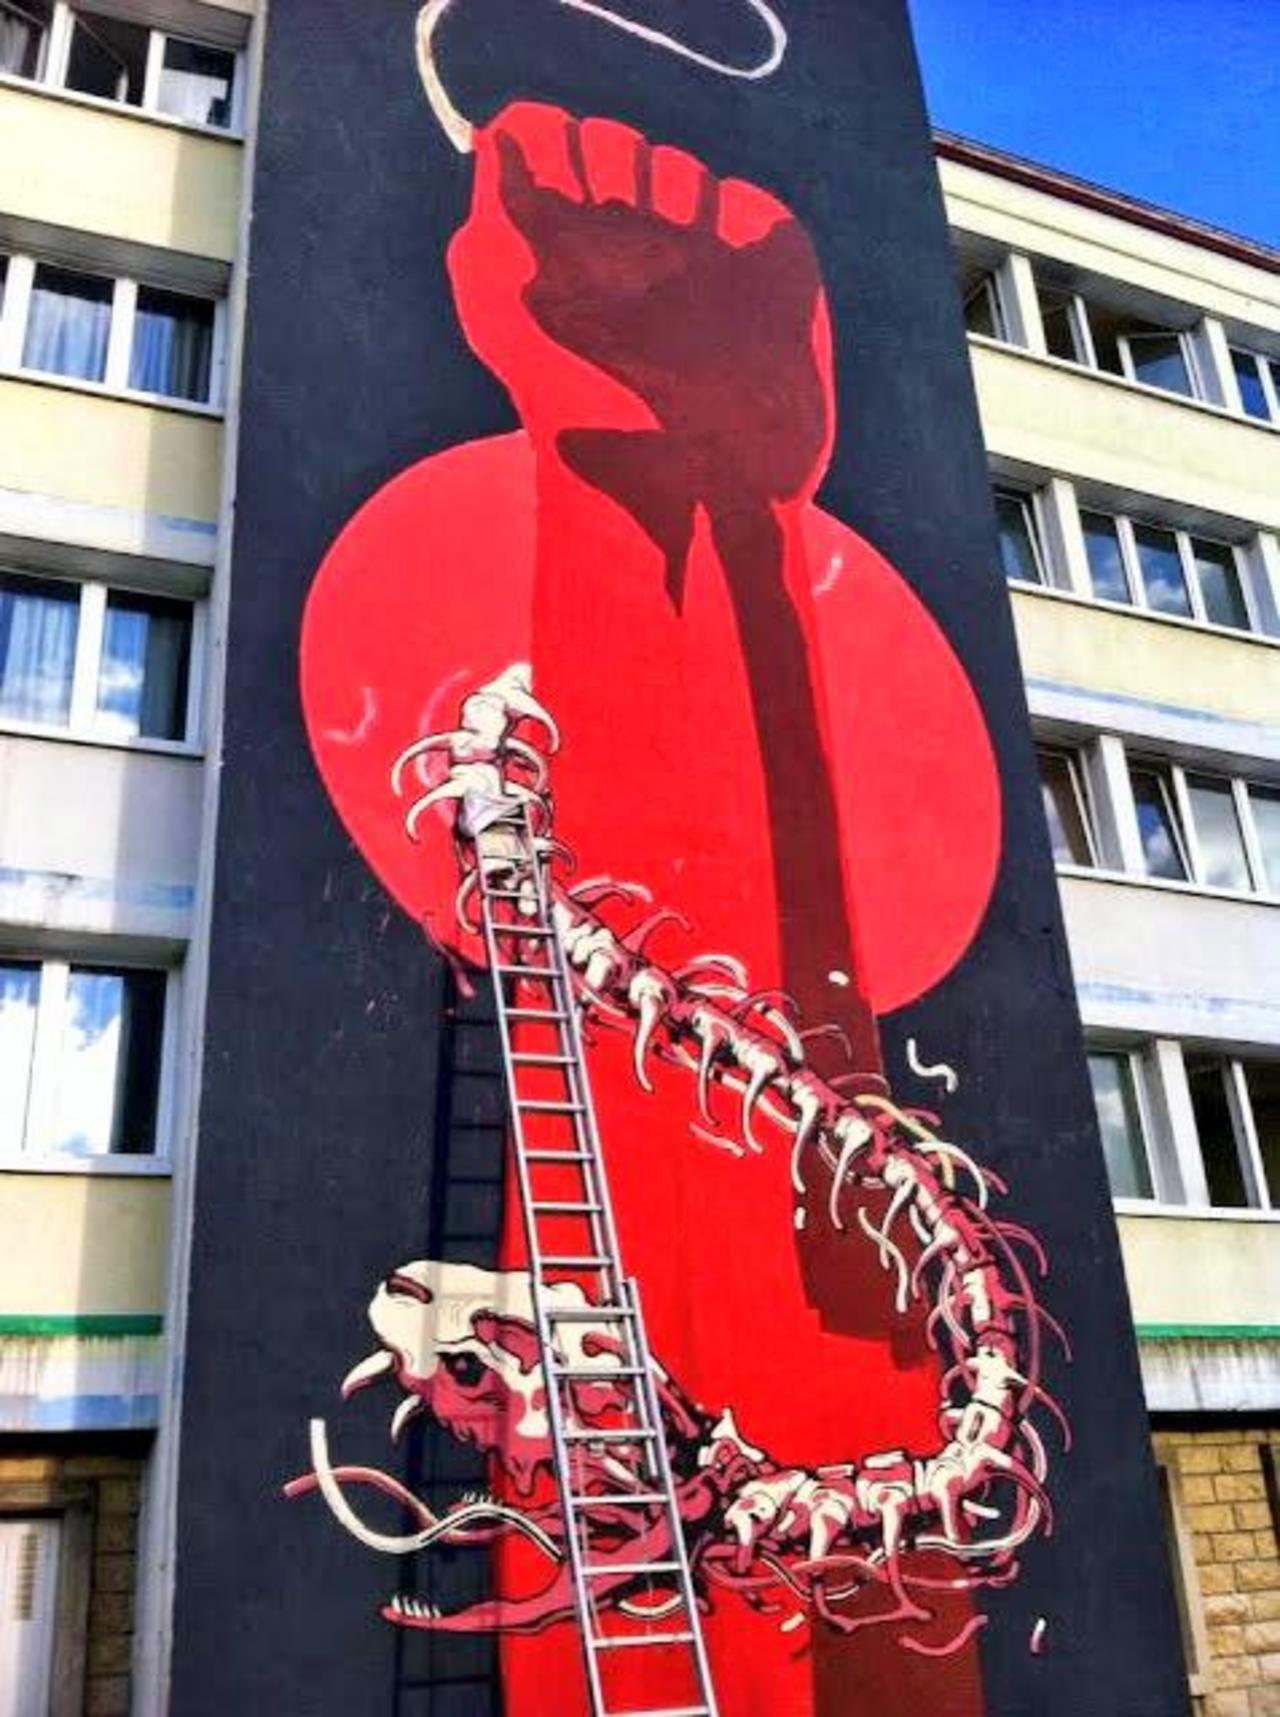 "@Pitchuskita: Smithe & Seher
Besancon, France
#streetart #art #graffiti #mural http://t.co/RfpgQta2f8"